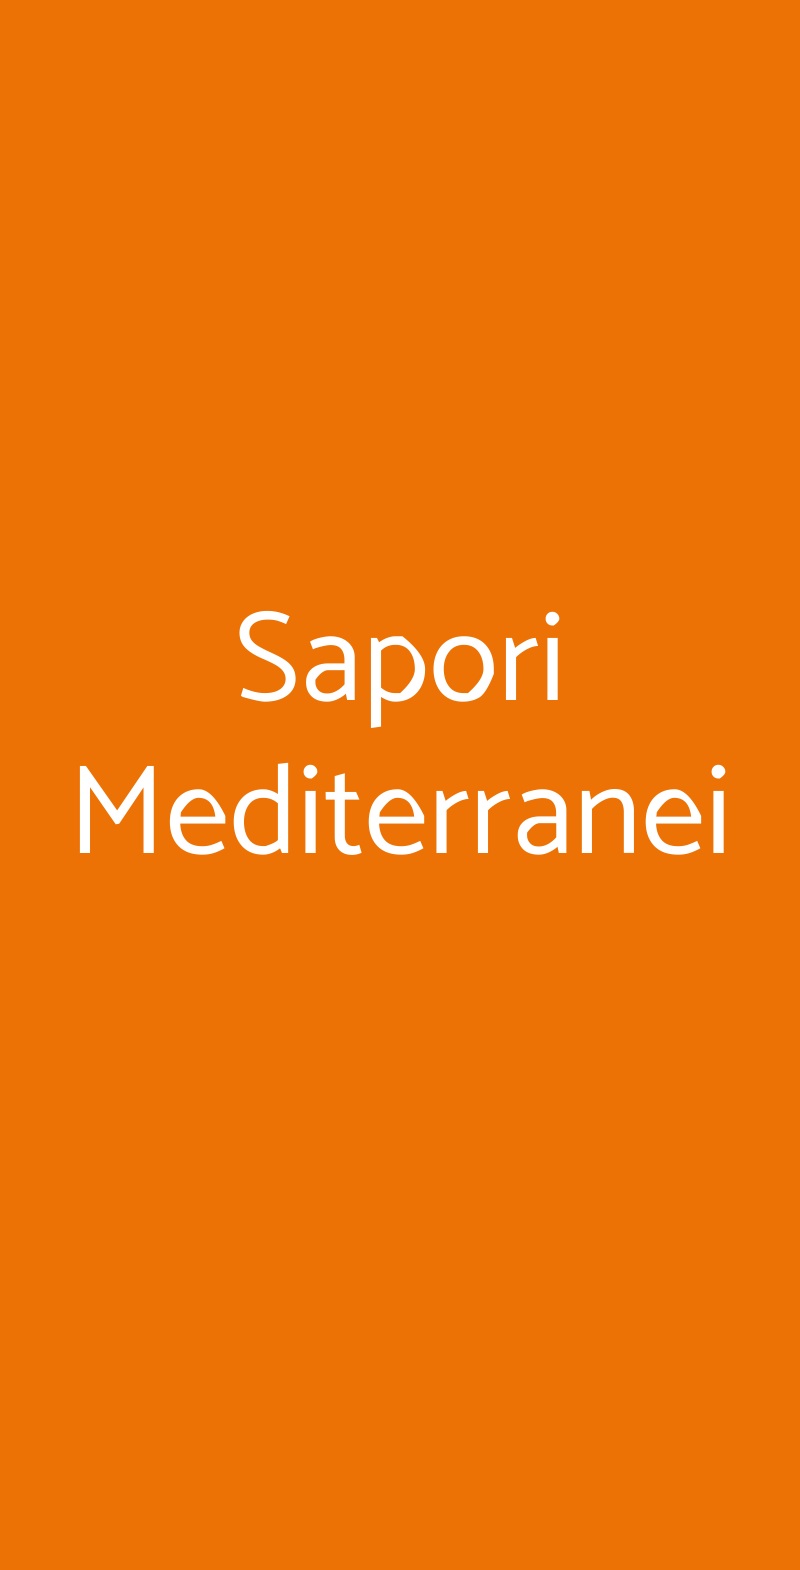 Sapori Mediterranei Paderno Dugnano menù 1 pagina